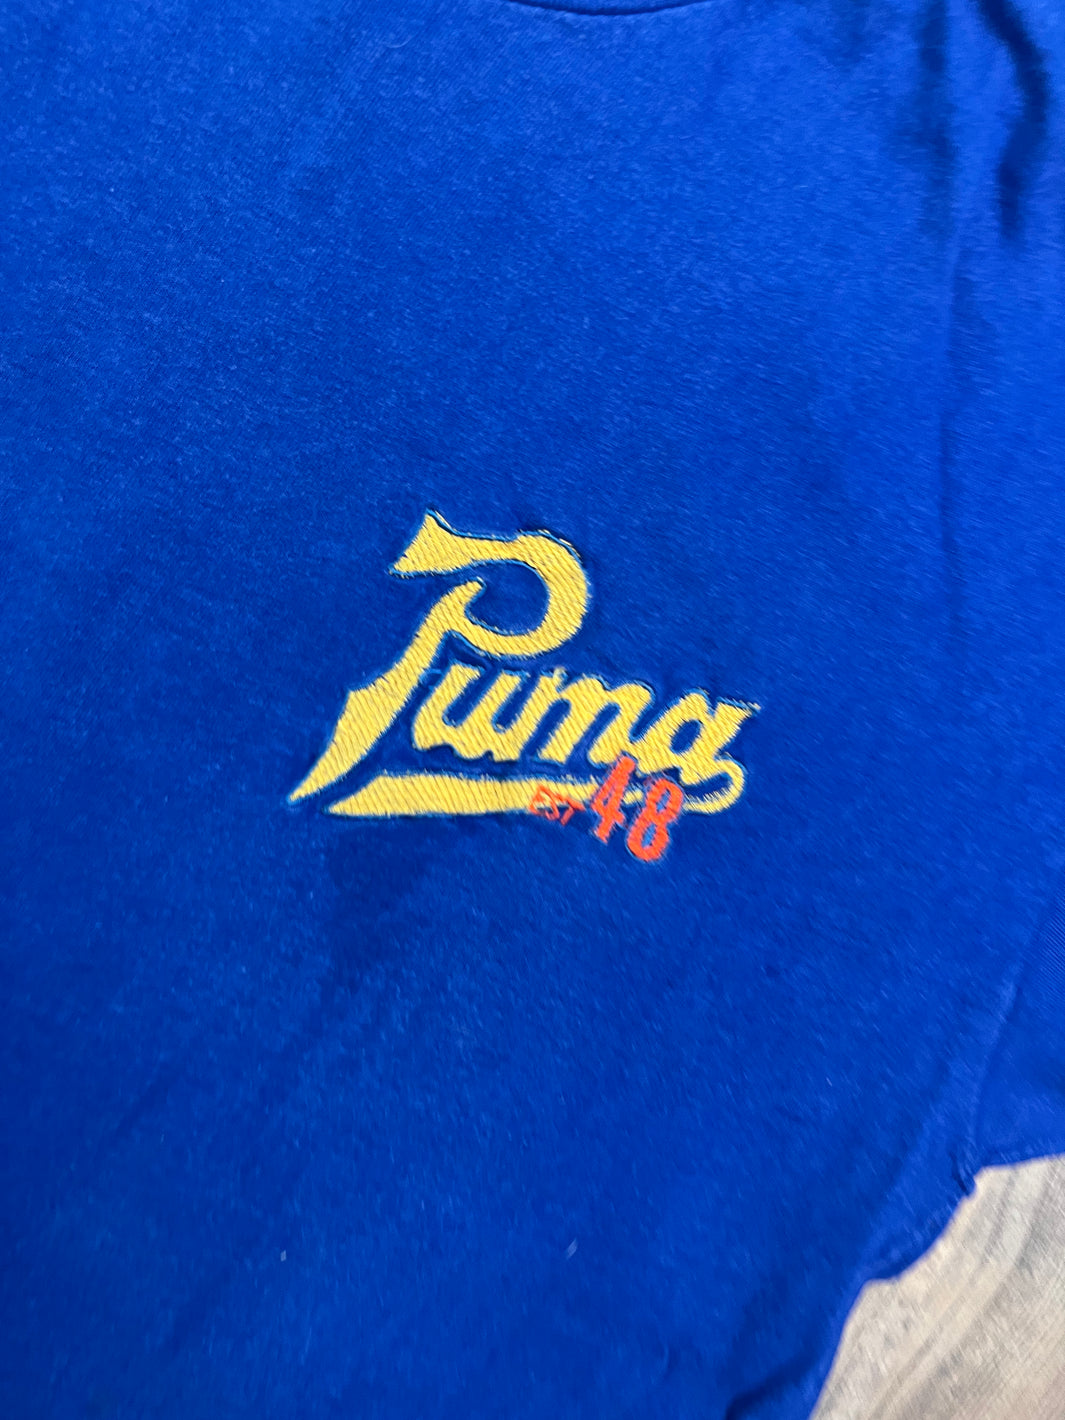 Vintage Puma Shirt embroidered